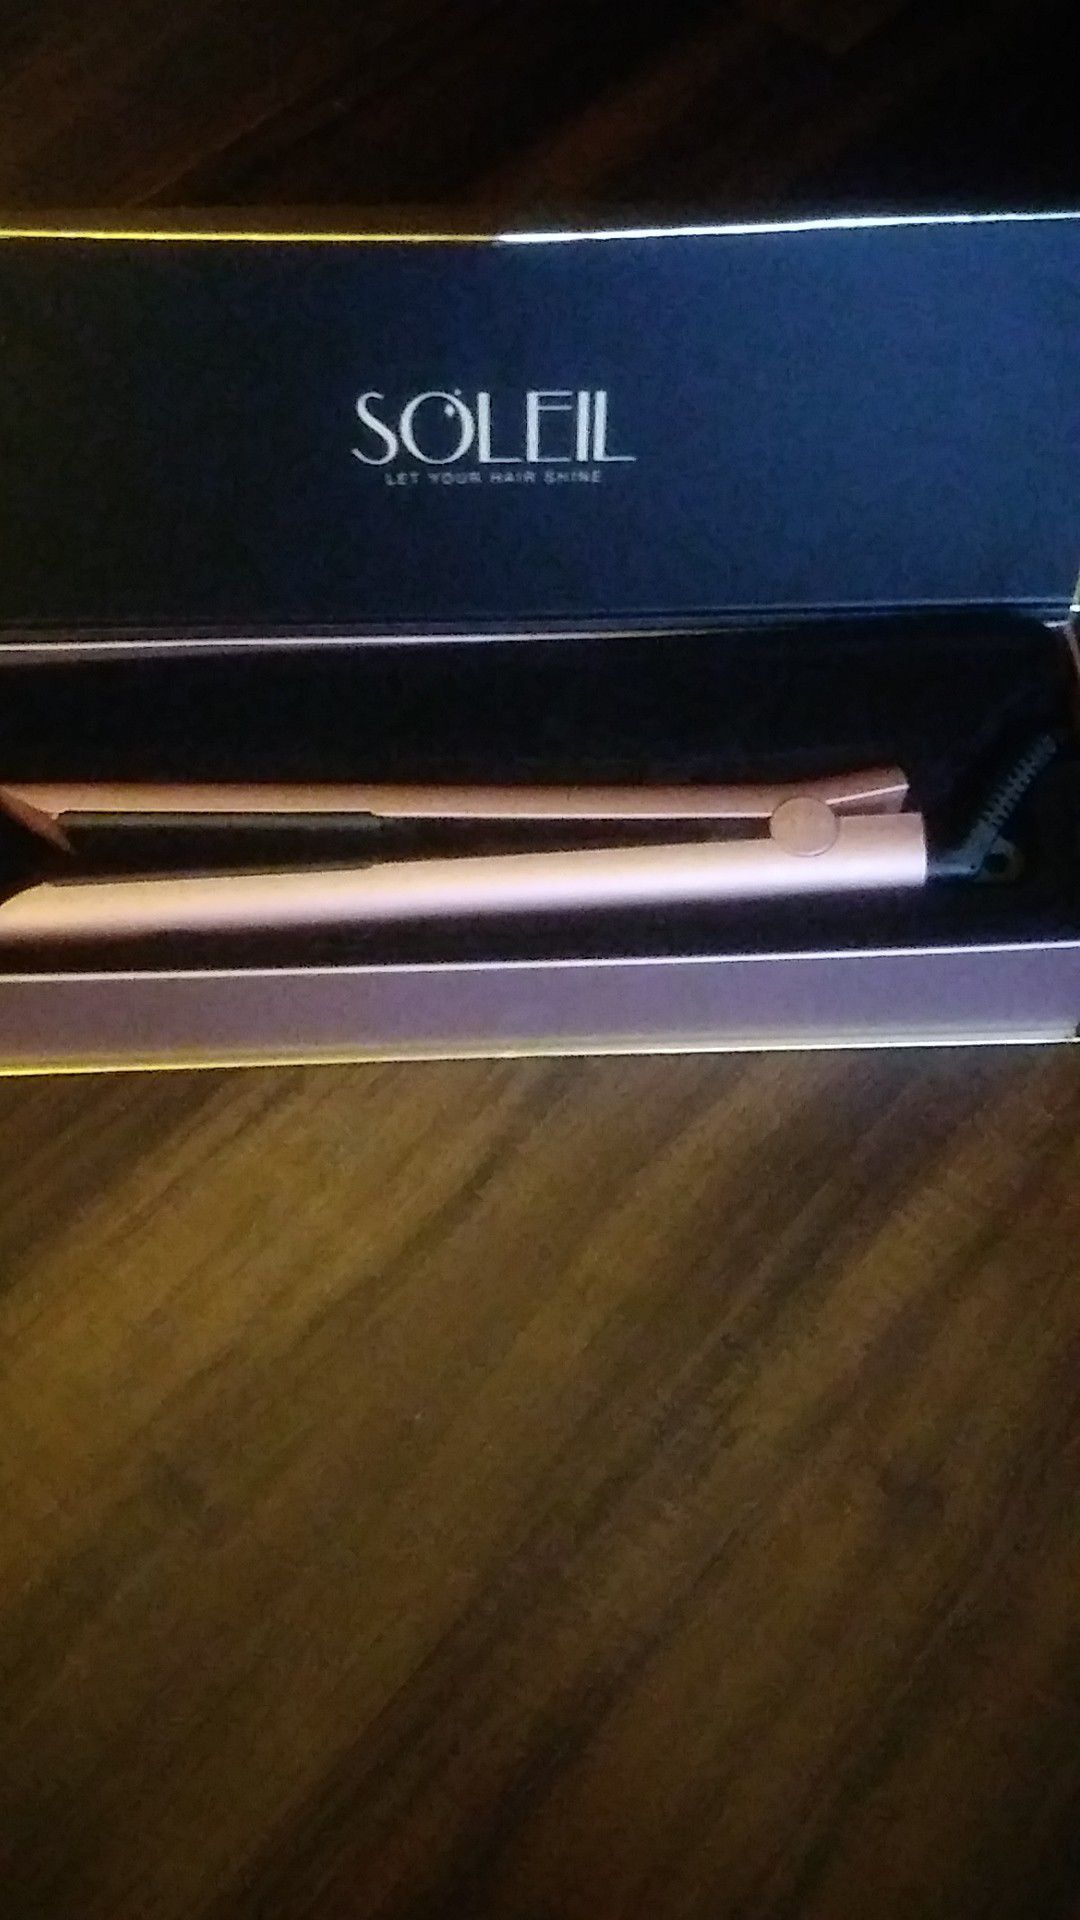 Soleil rose gold hair straightener/curler